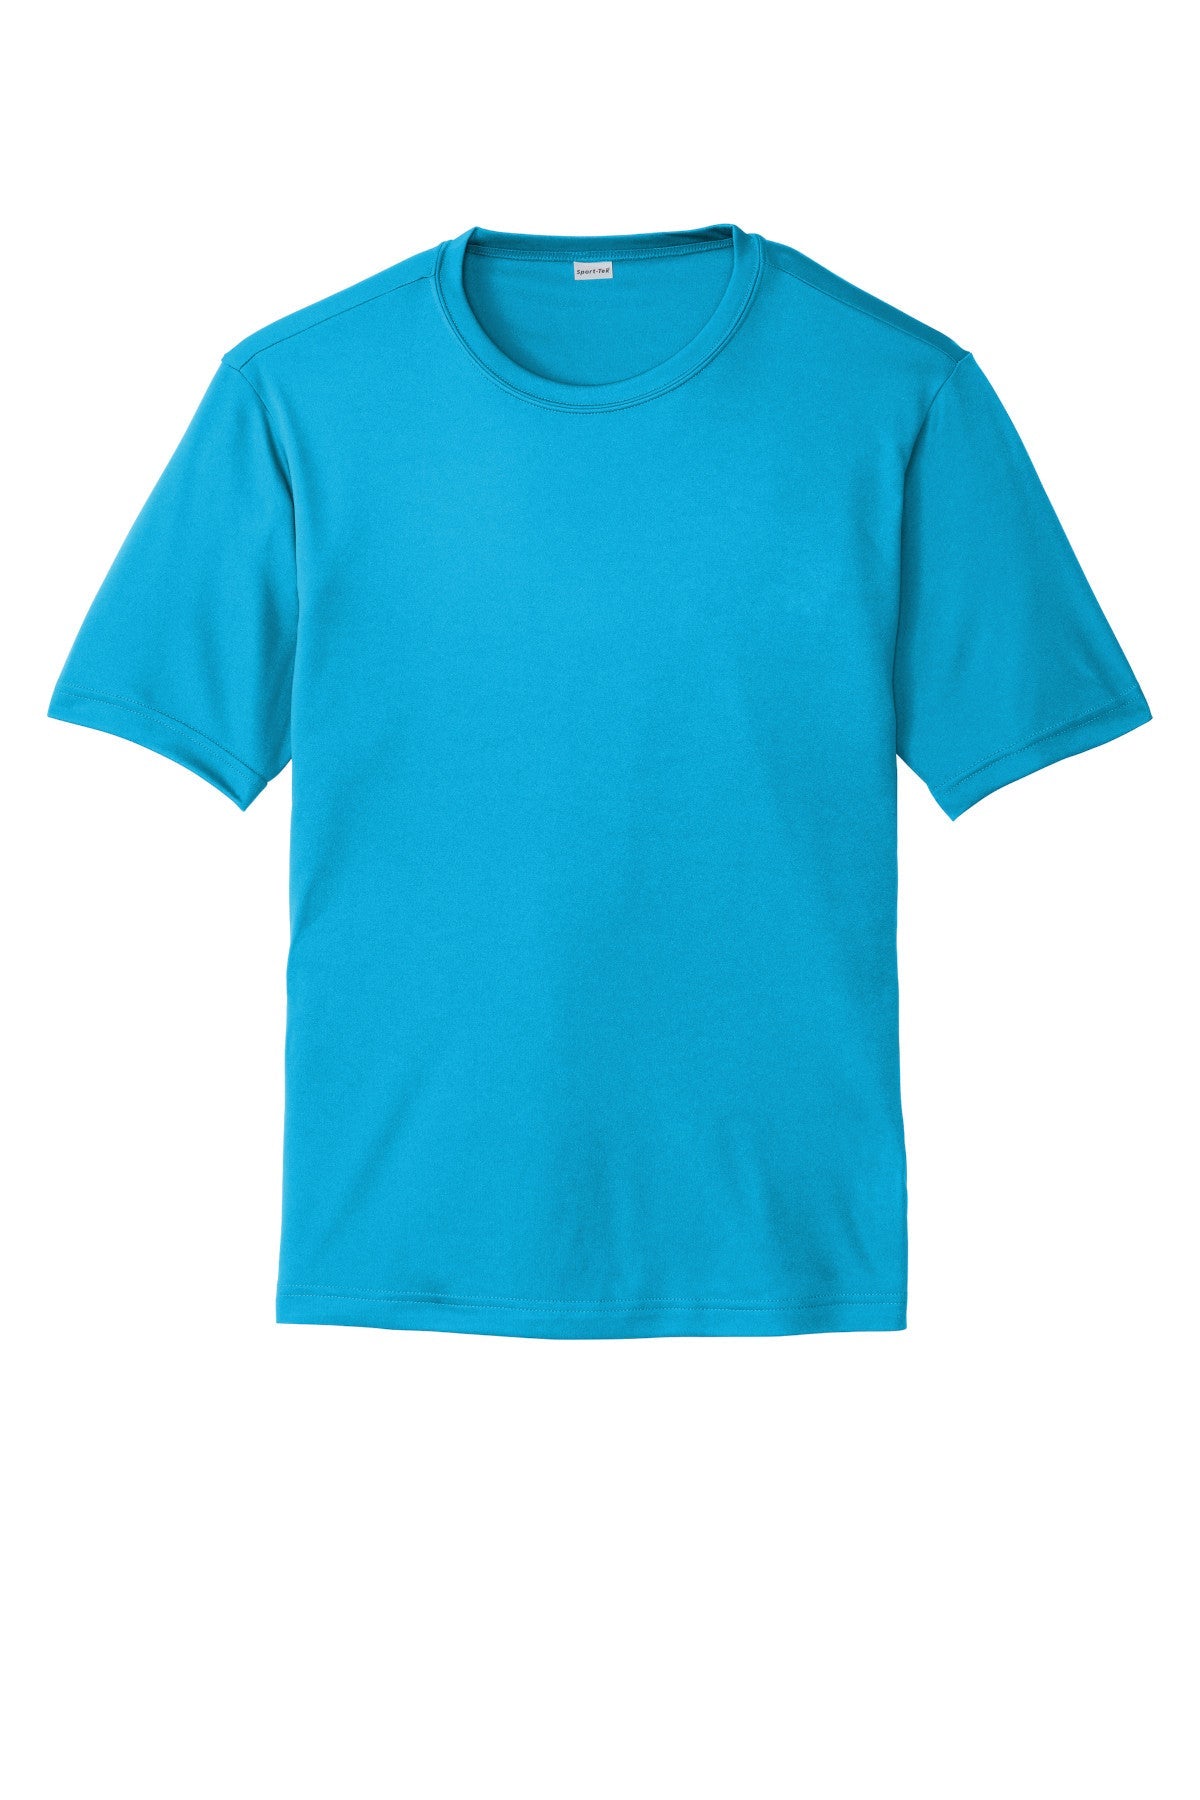 Sport-Tek St350 Polyester Adult T-Shirt Ad Small / Atomic Blue